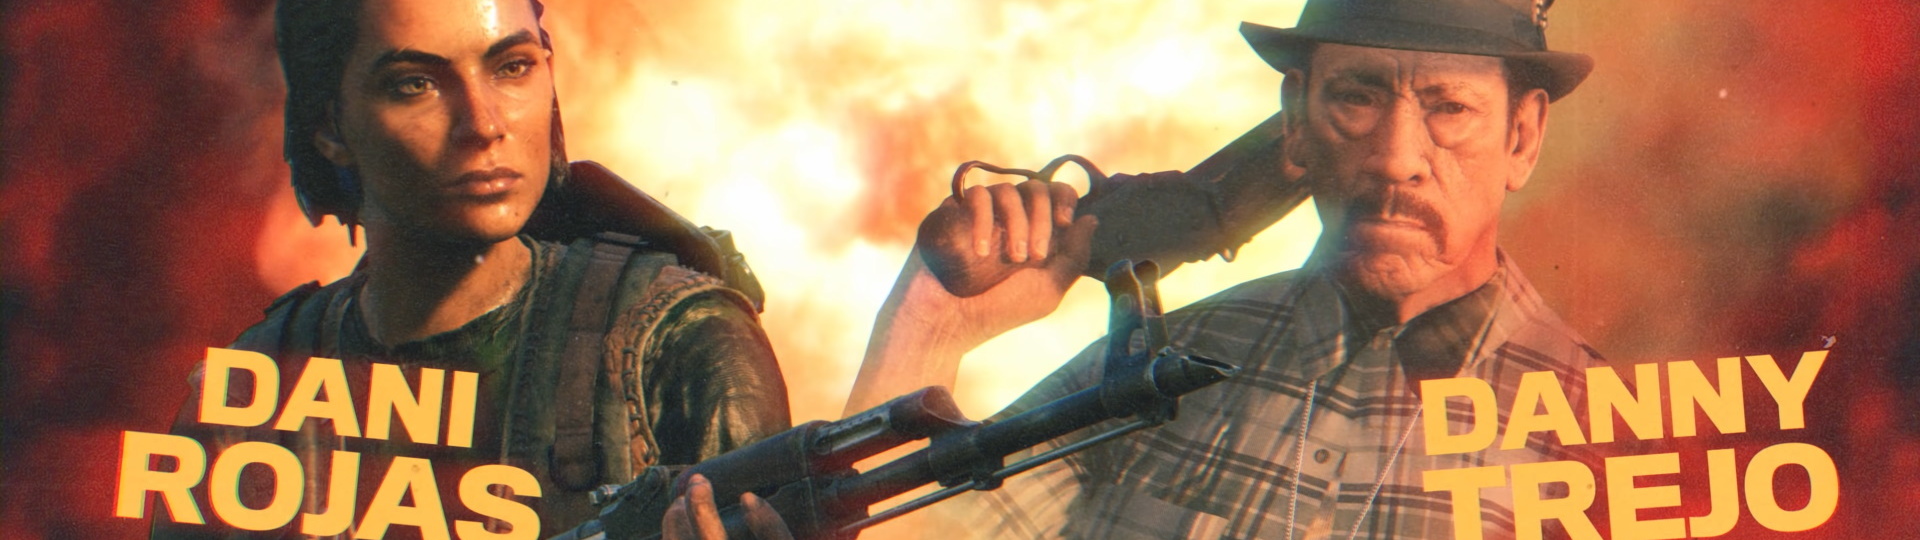 Far Cry 6 dostane bohatý obsah po vydání | Videa